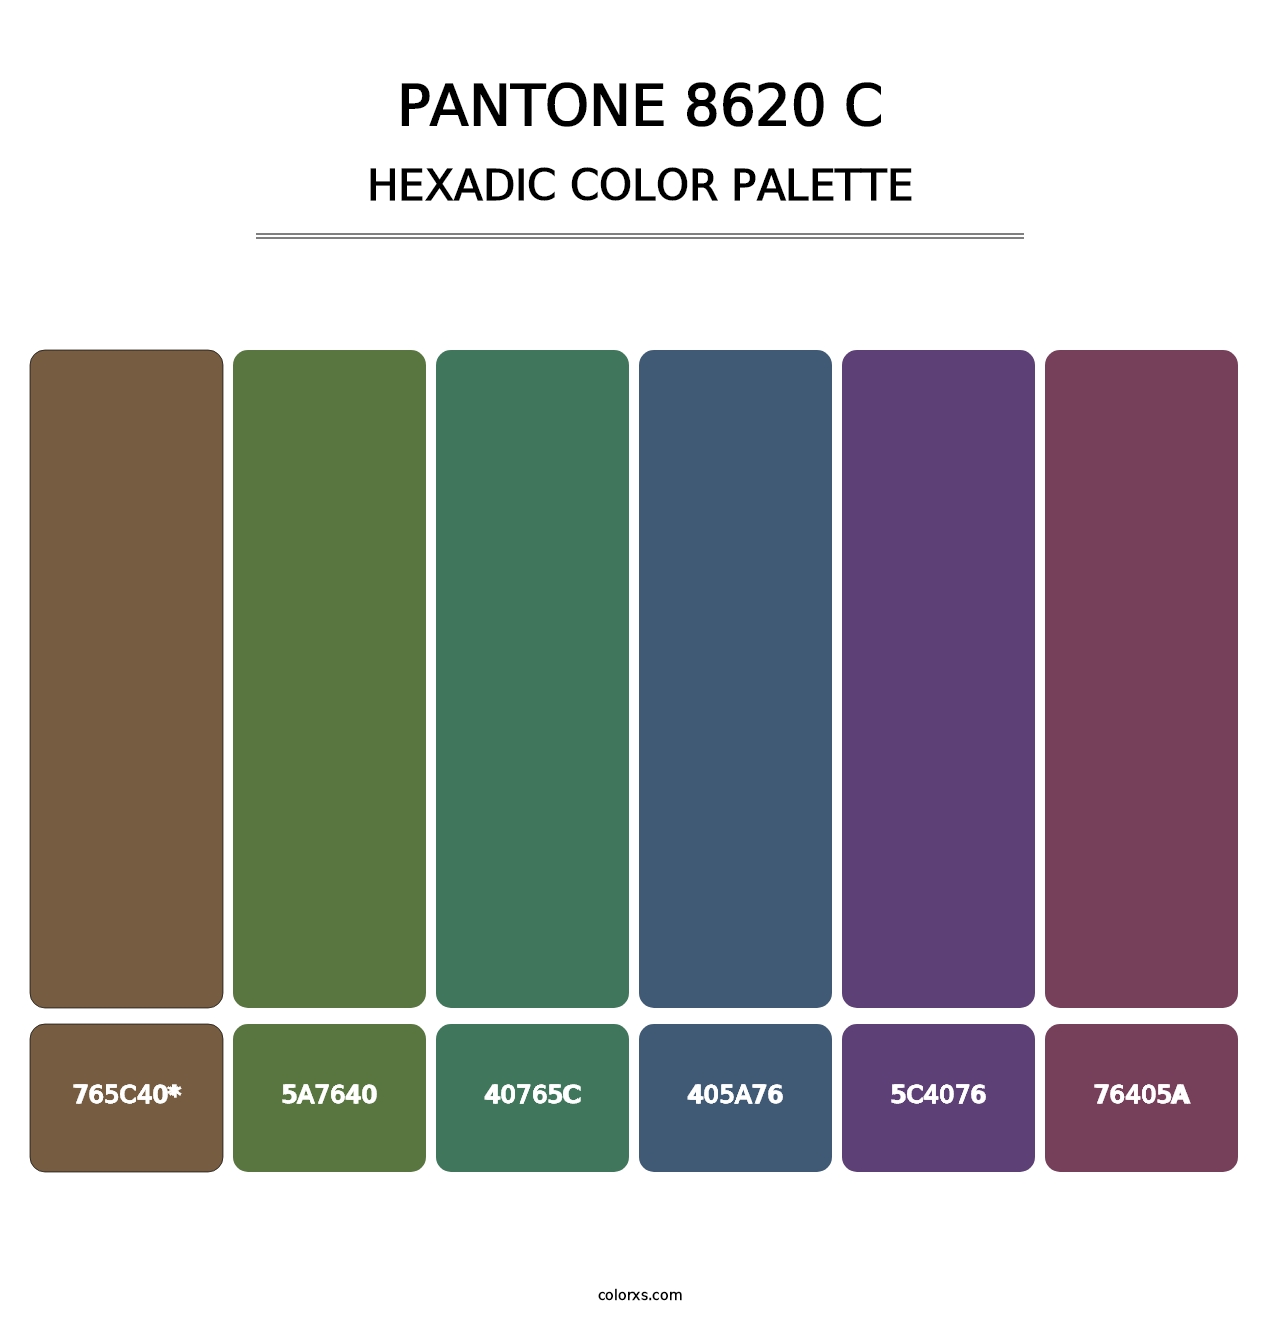 PANTONE 8620 C - Hexadic Color Palette